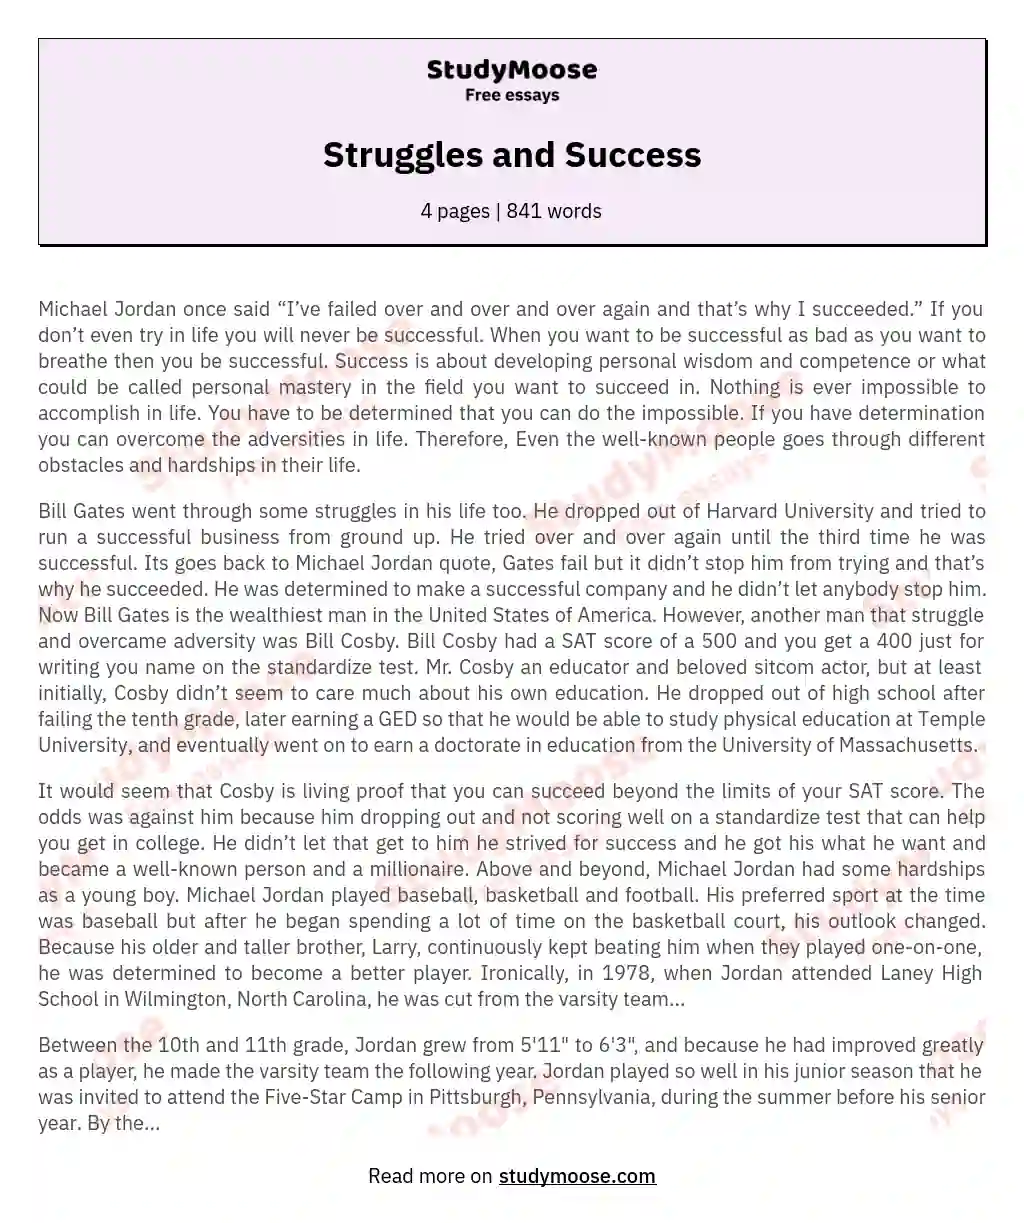 Struggles and Success essay